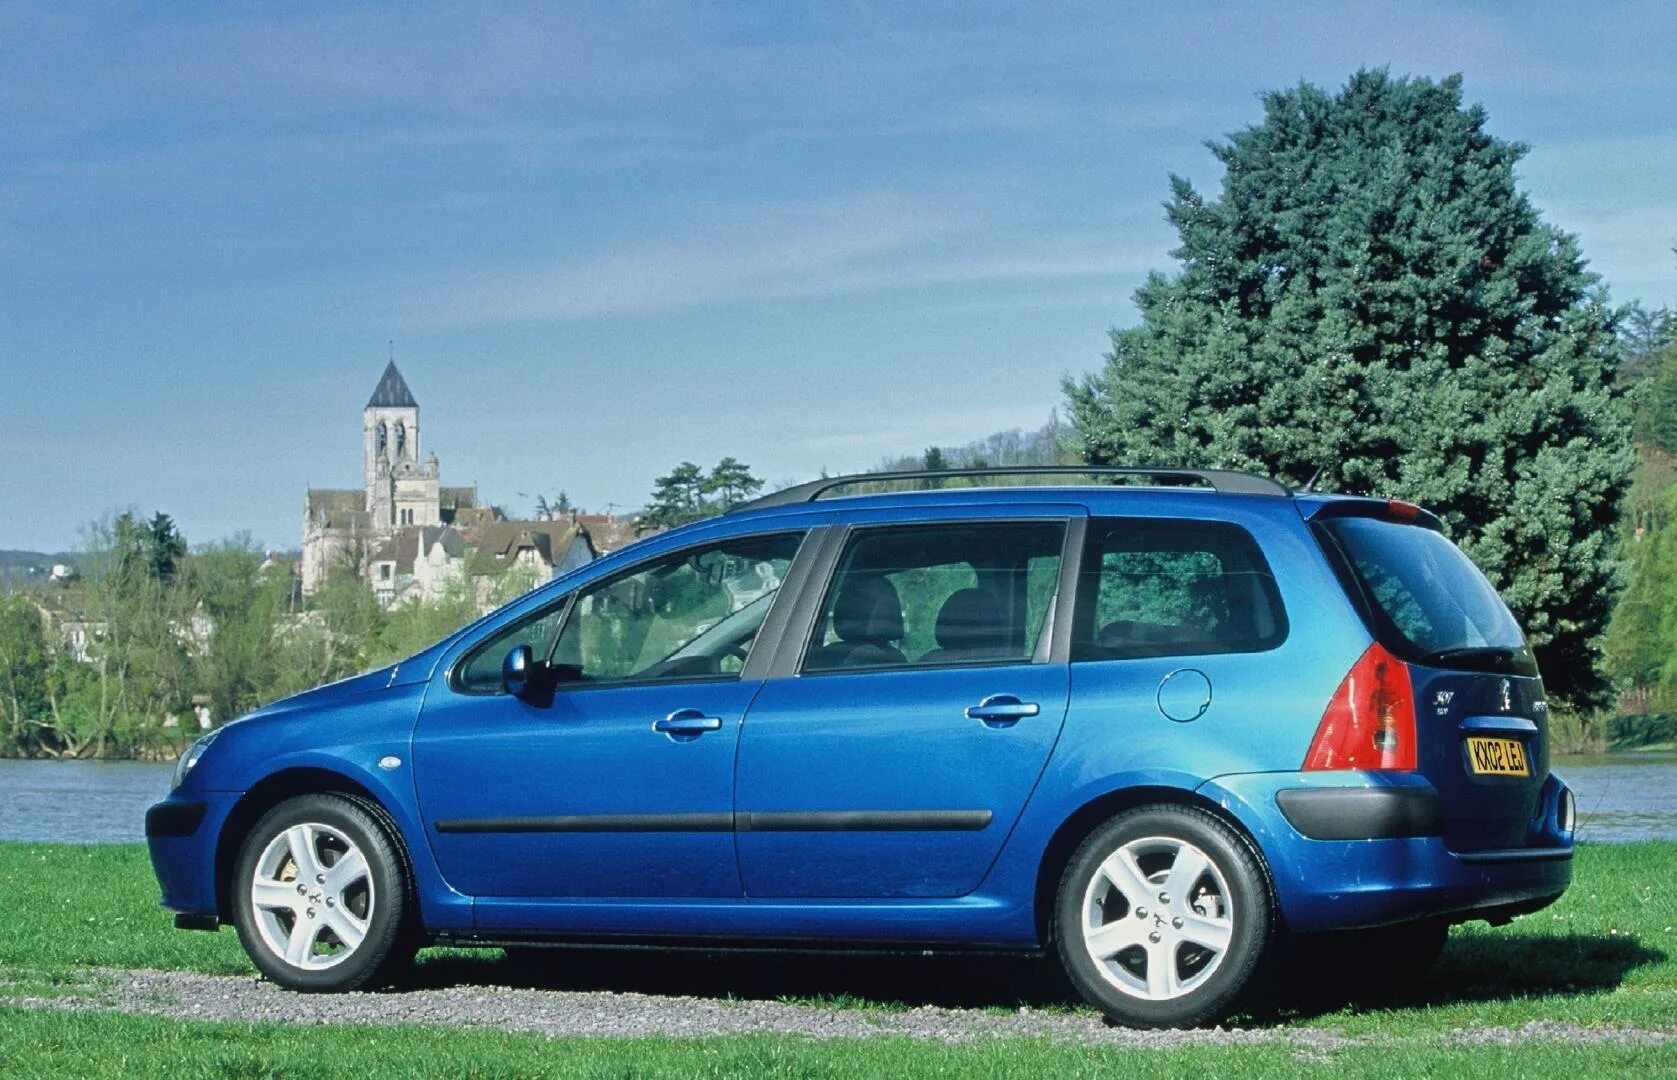 Peugeot 307 SW. Пежо 307 SW универсал. Peugeot 307 SW 2002. Пежо 307 универсал 2002.